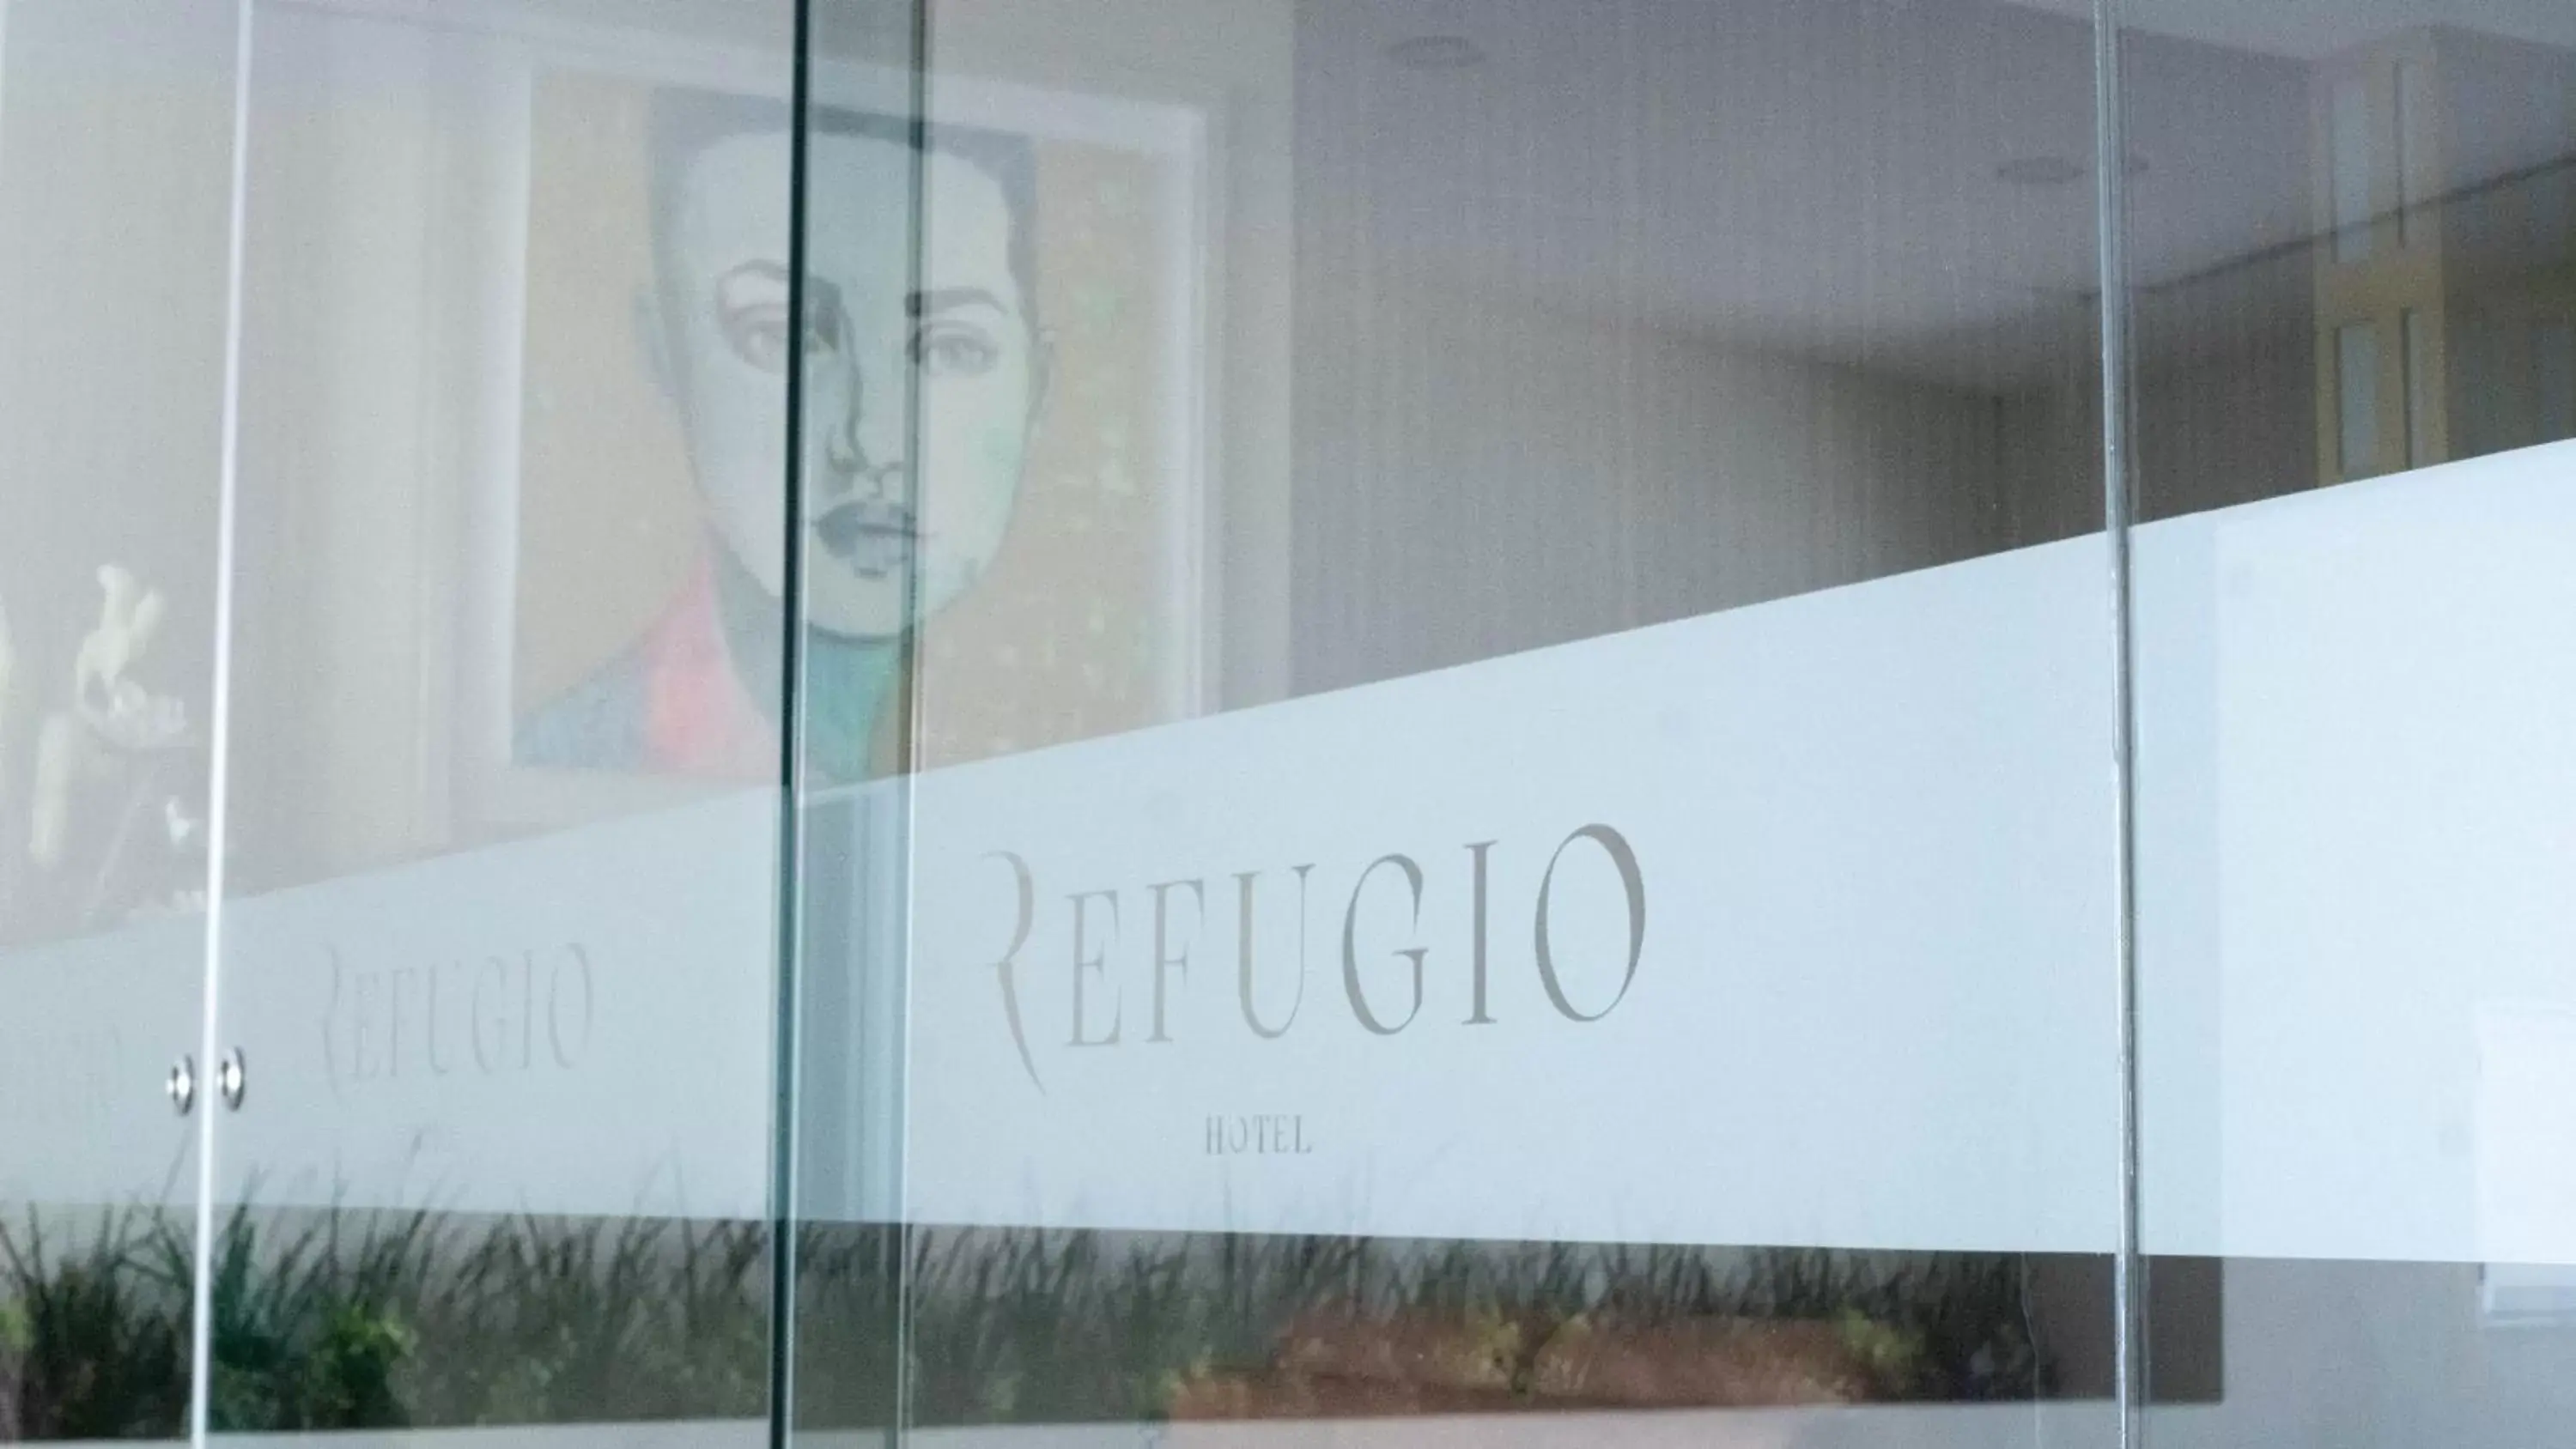 Text overlay in Hotel Refugio